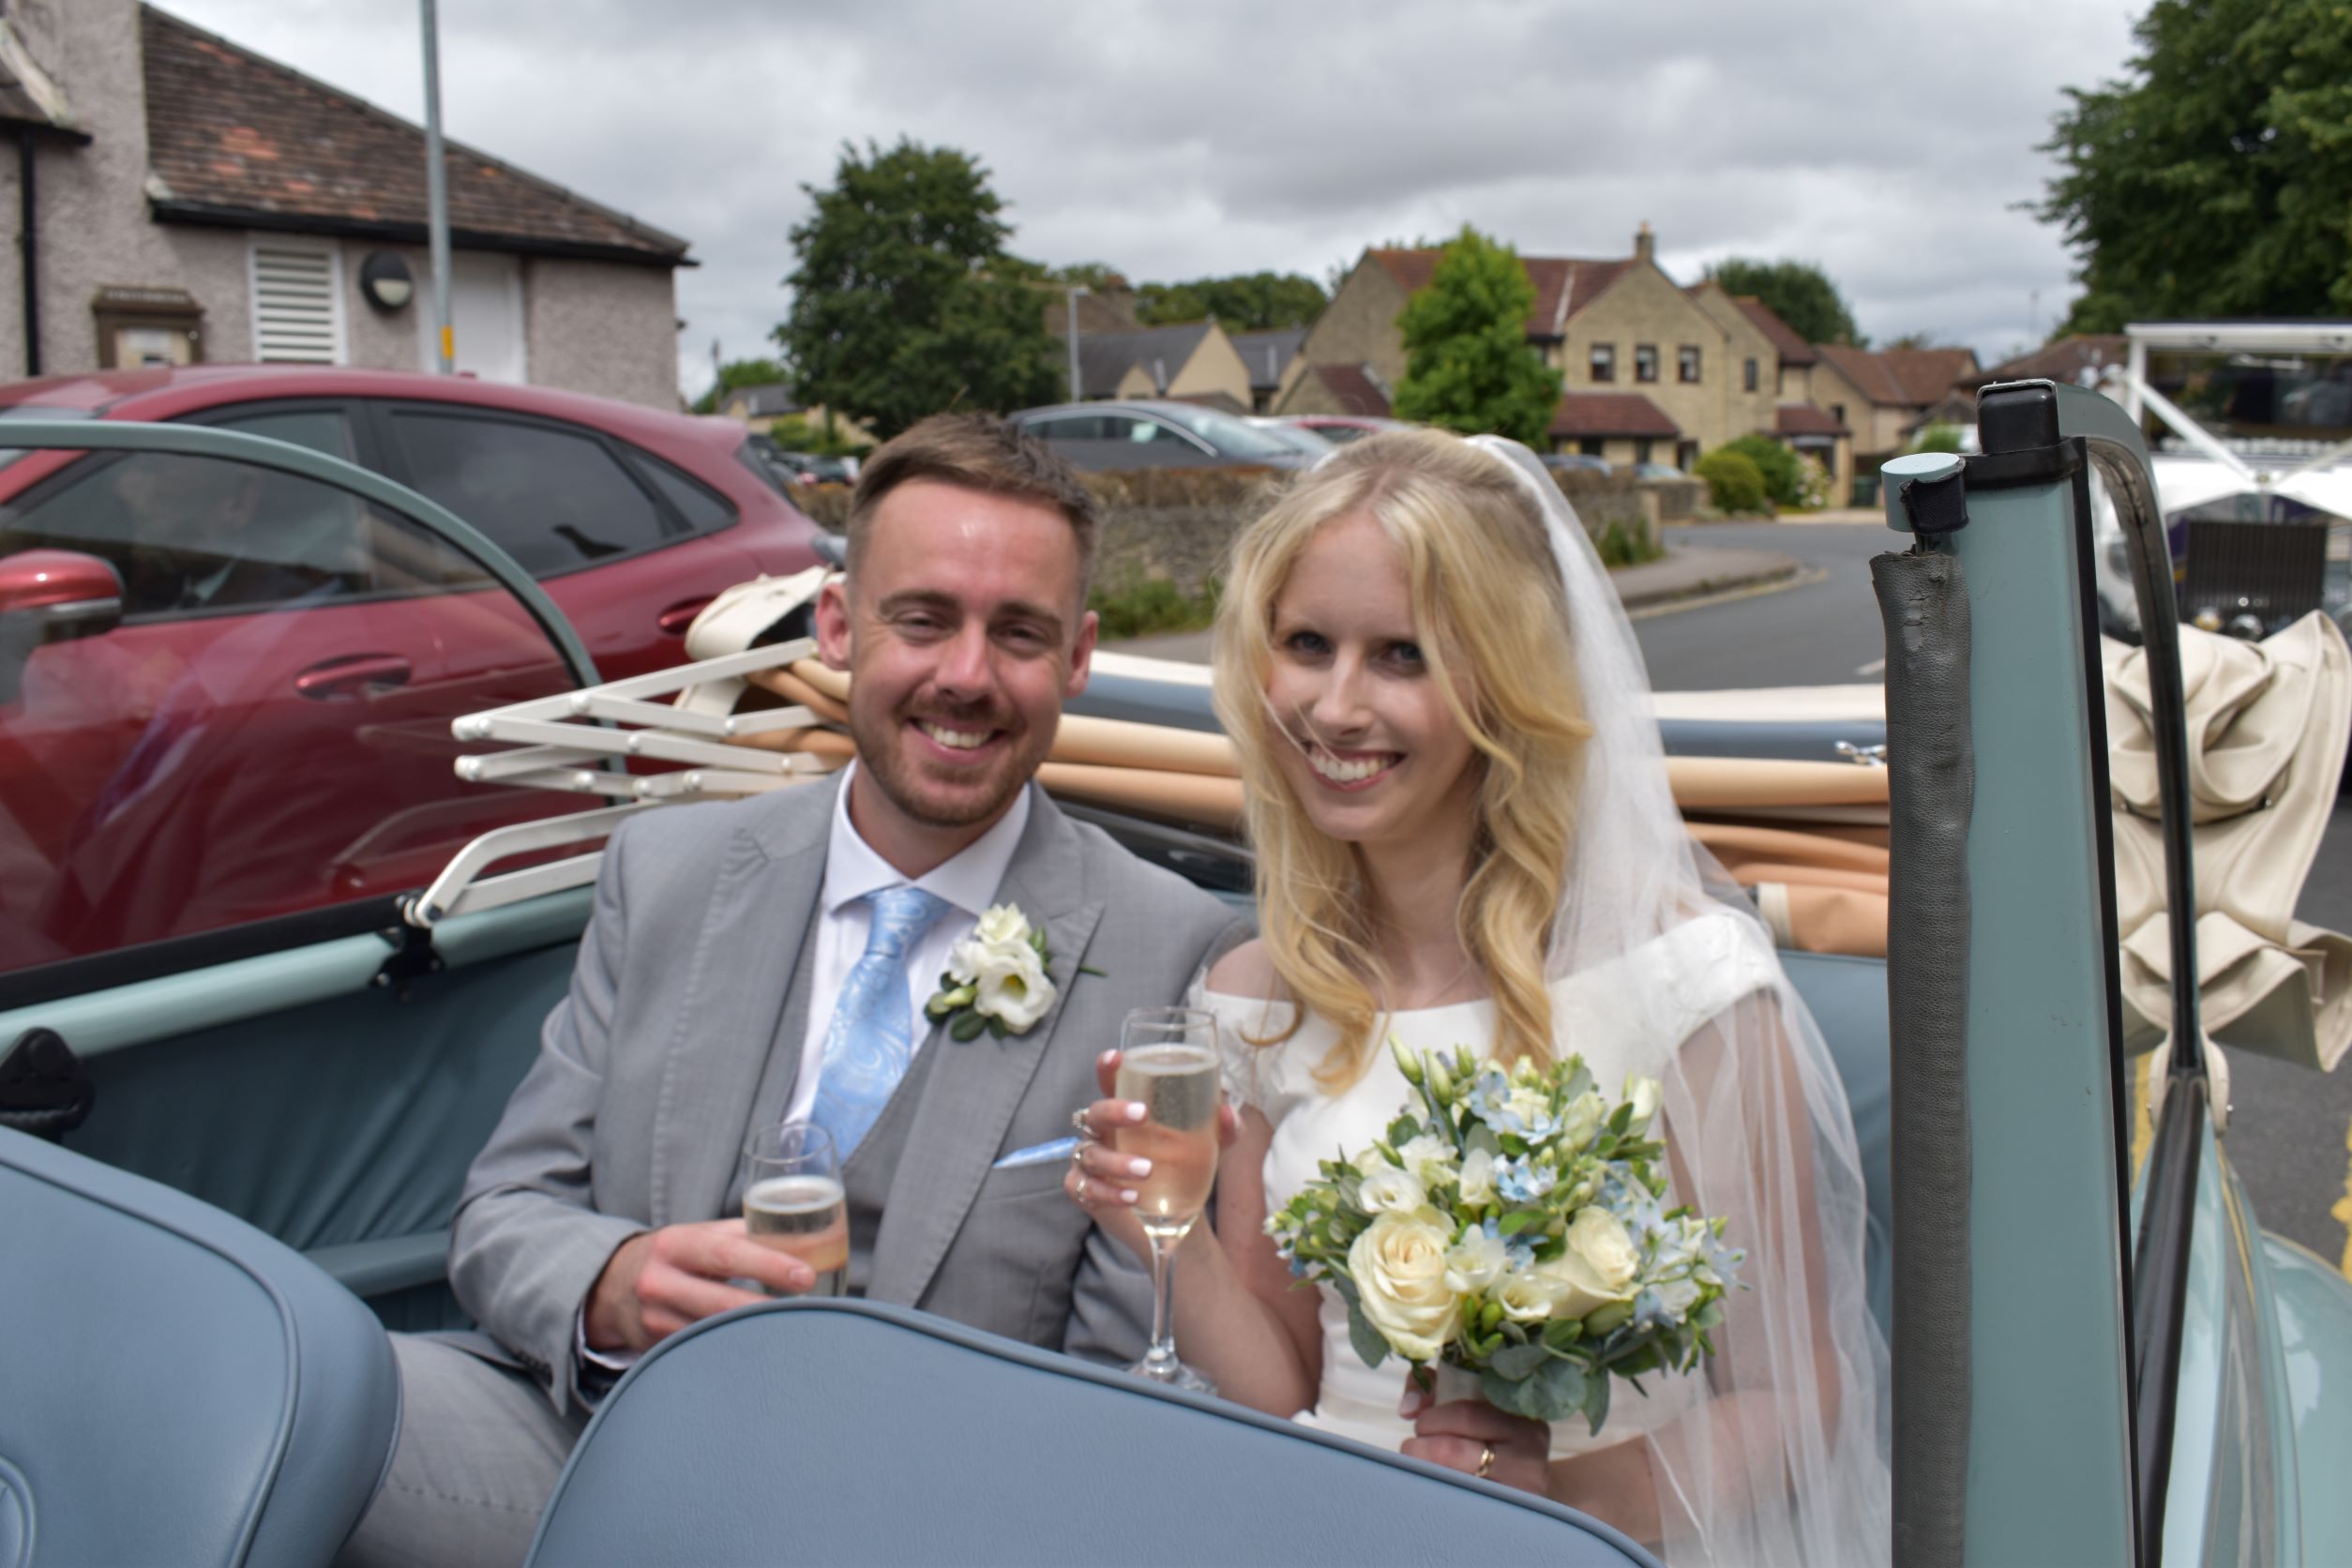 Bowood Wedding Reception for Kate & Ryan 30 July 2022